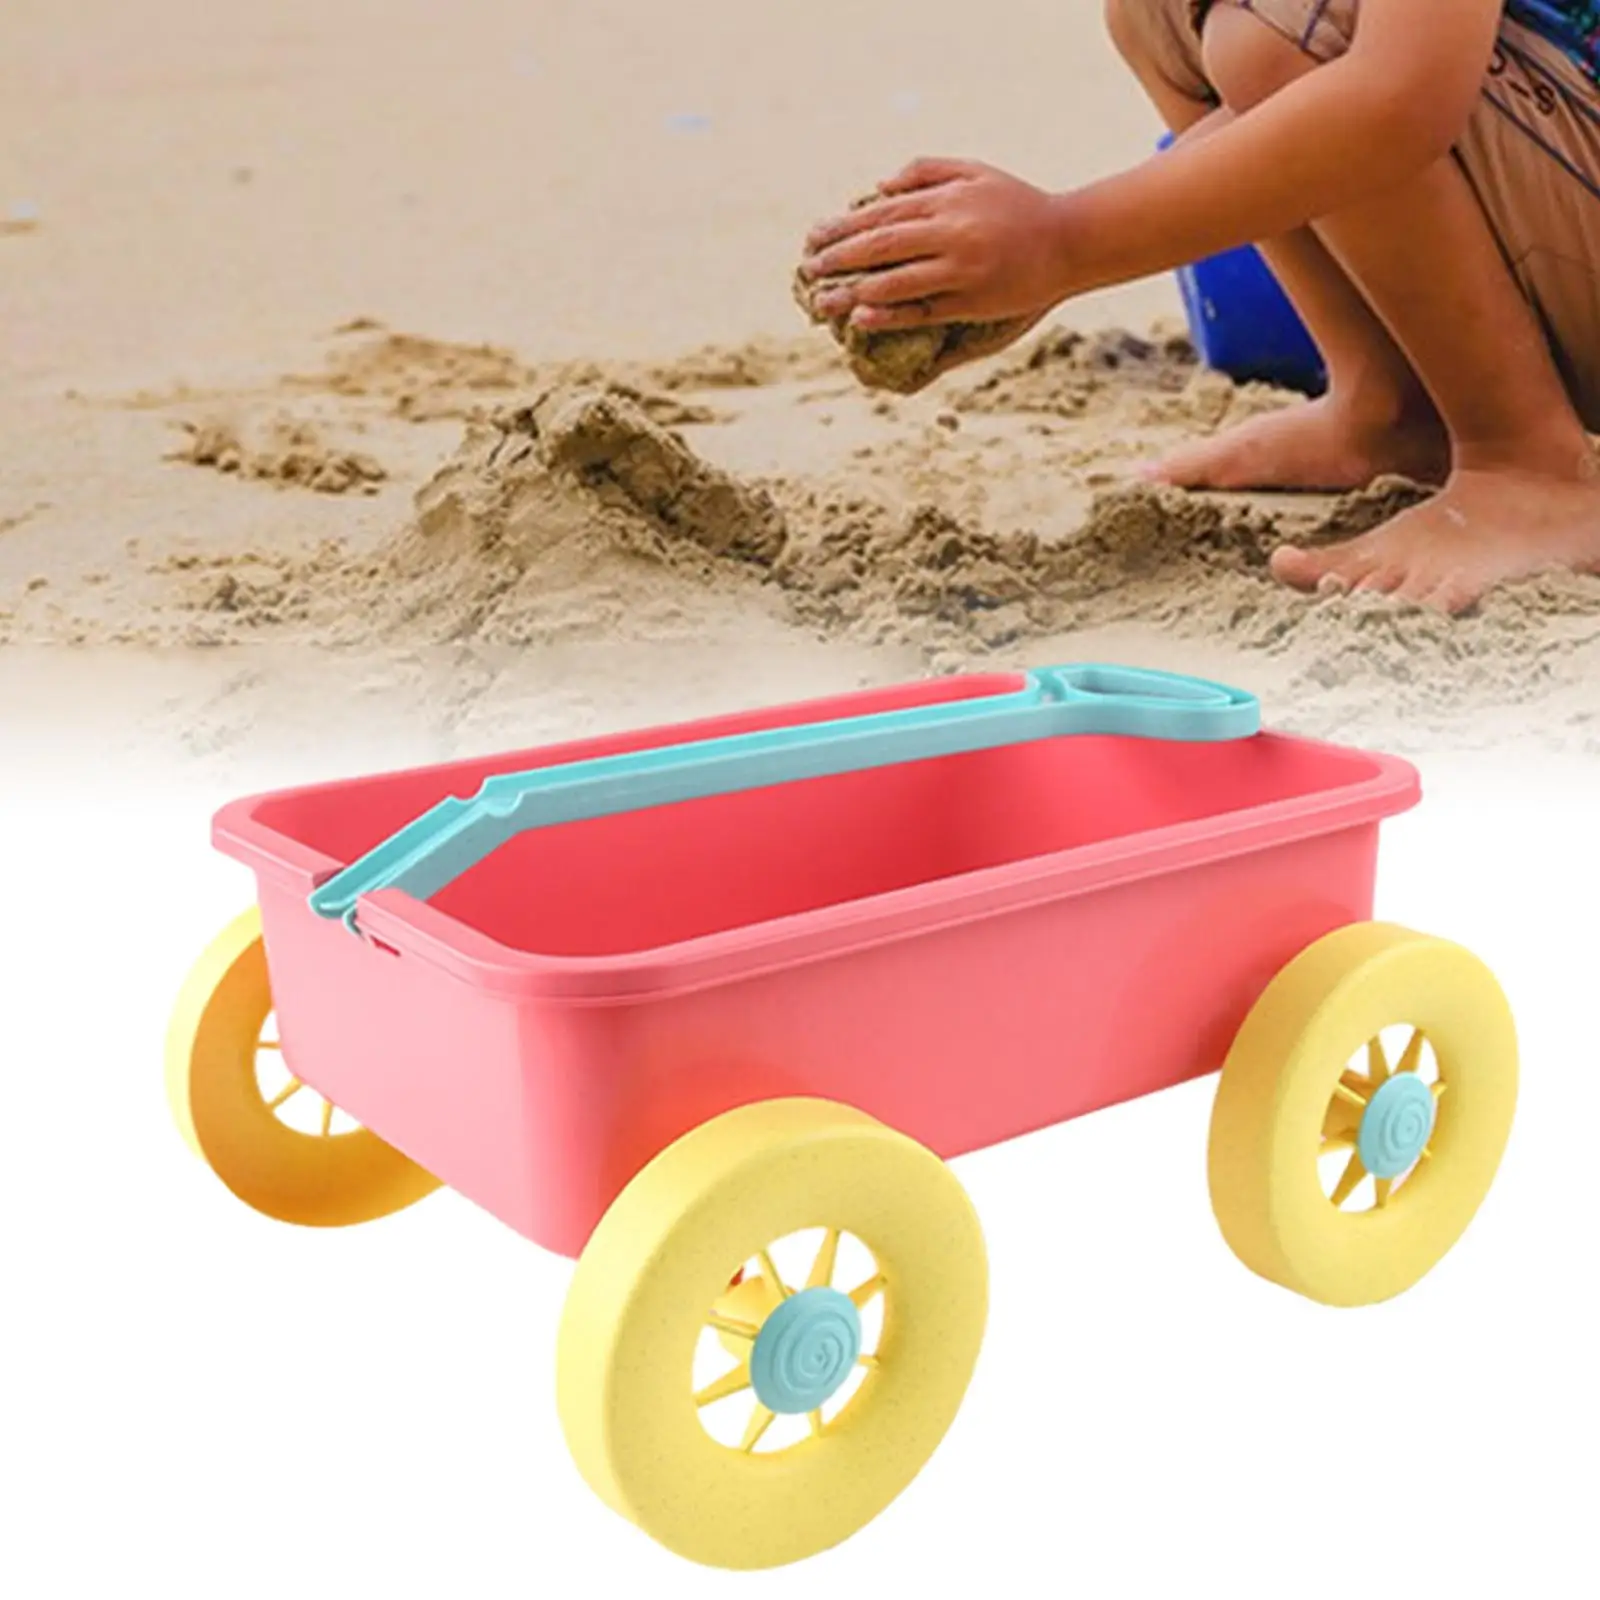 

Pretend Play Wagon Toy Outdoor Indoor Toy Children Wagon Cart Summer Sand Toy Trolley for Gardening Summer Beach Seaside Outdoor